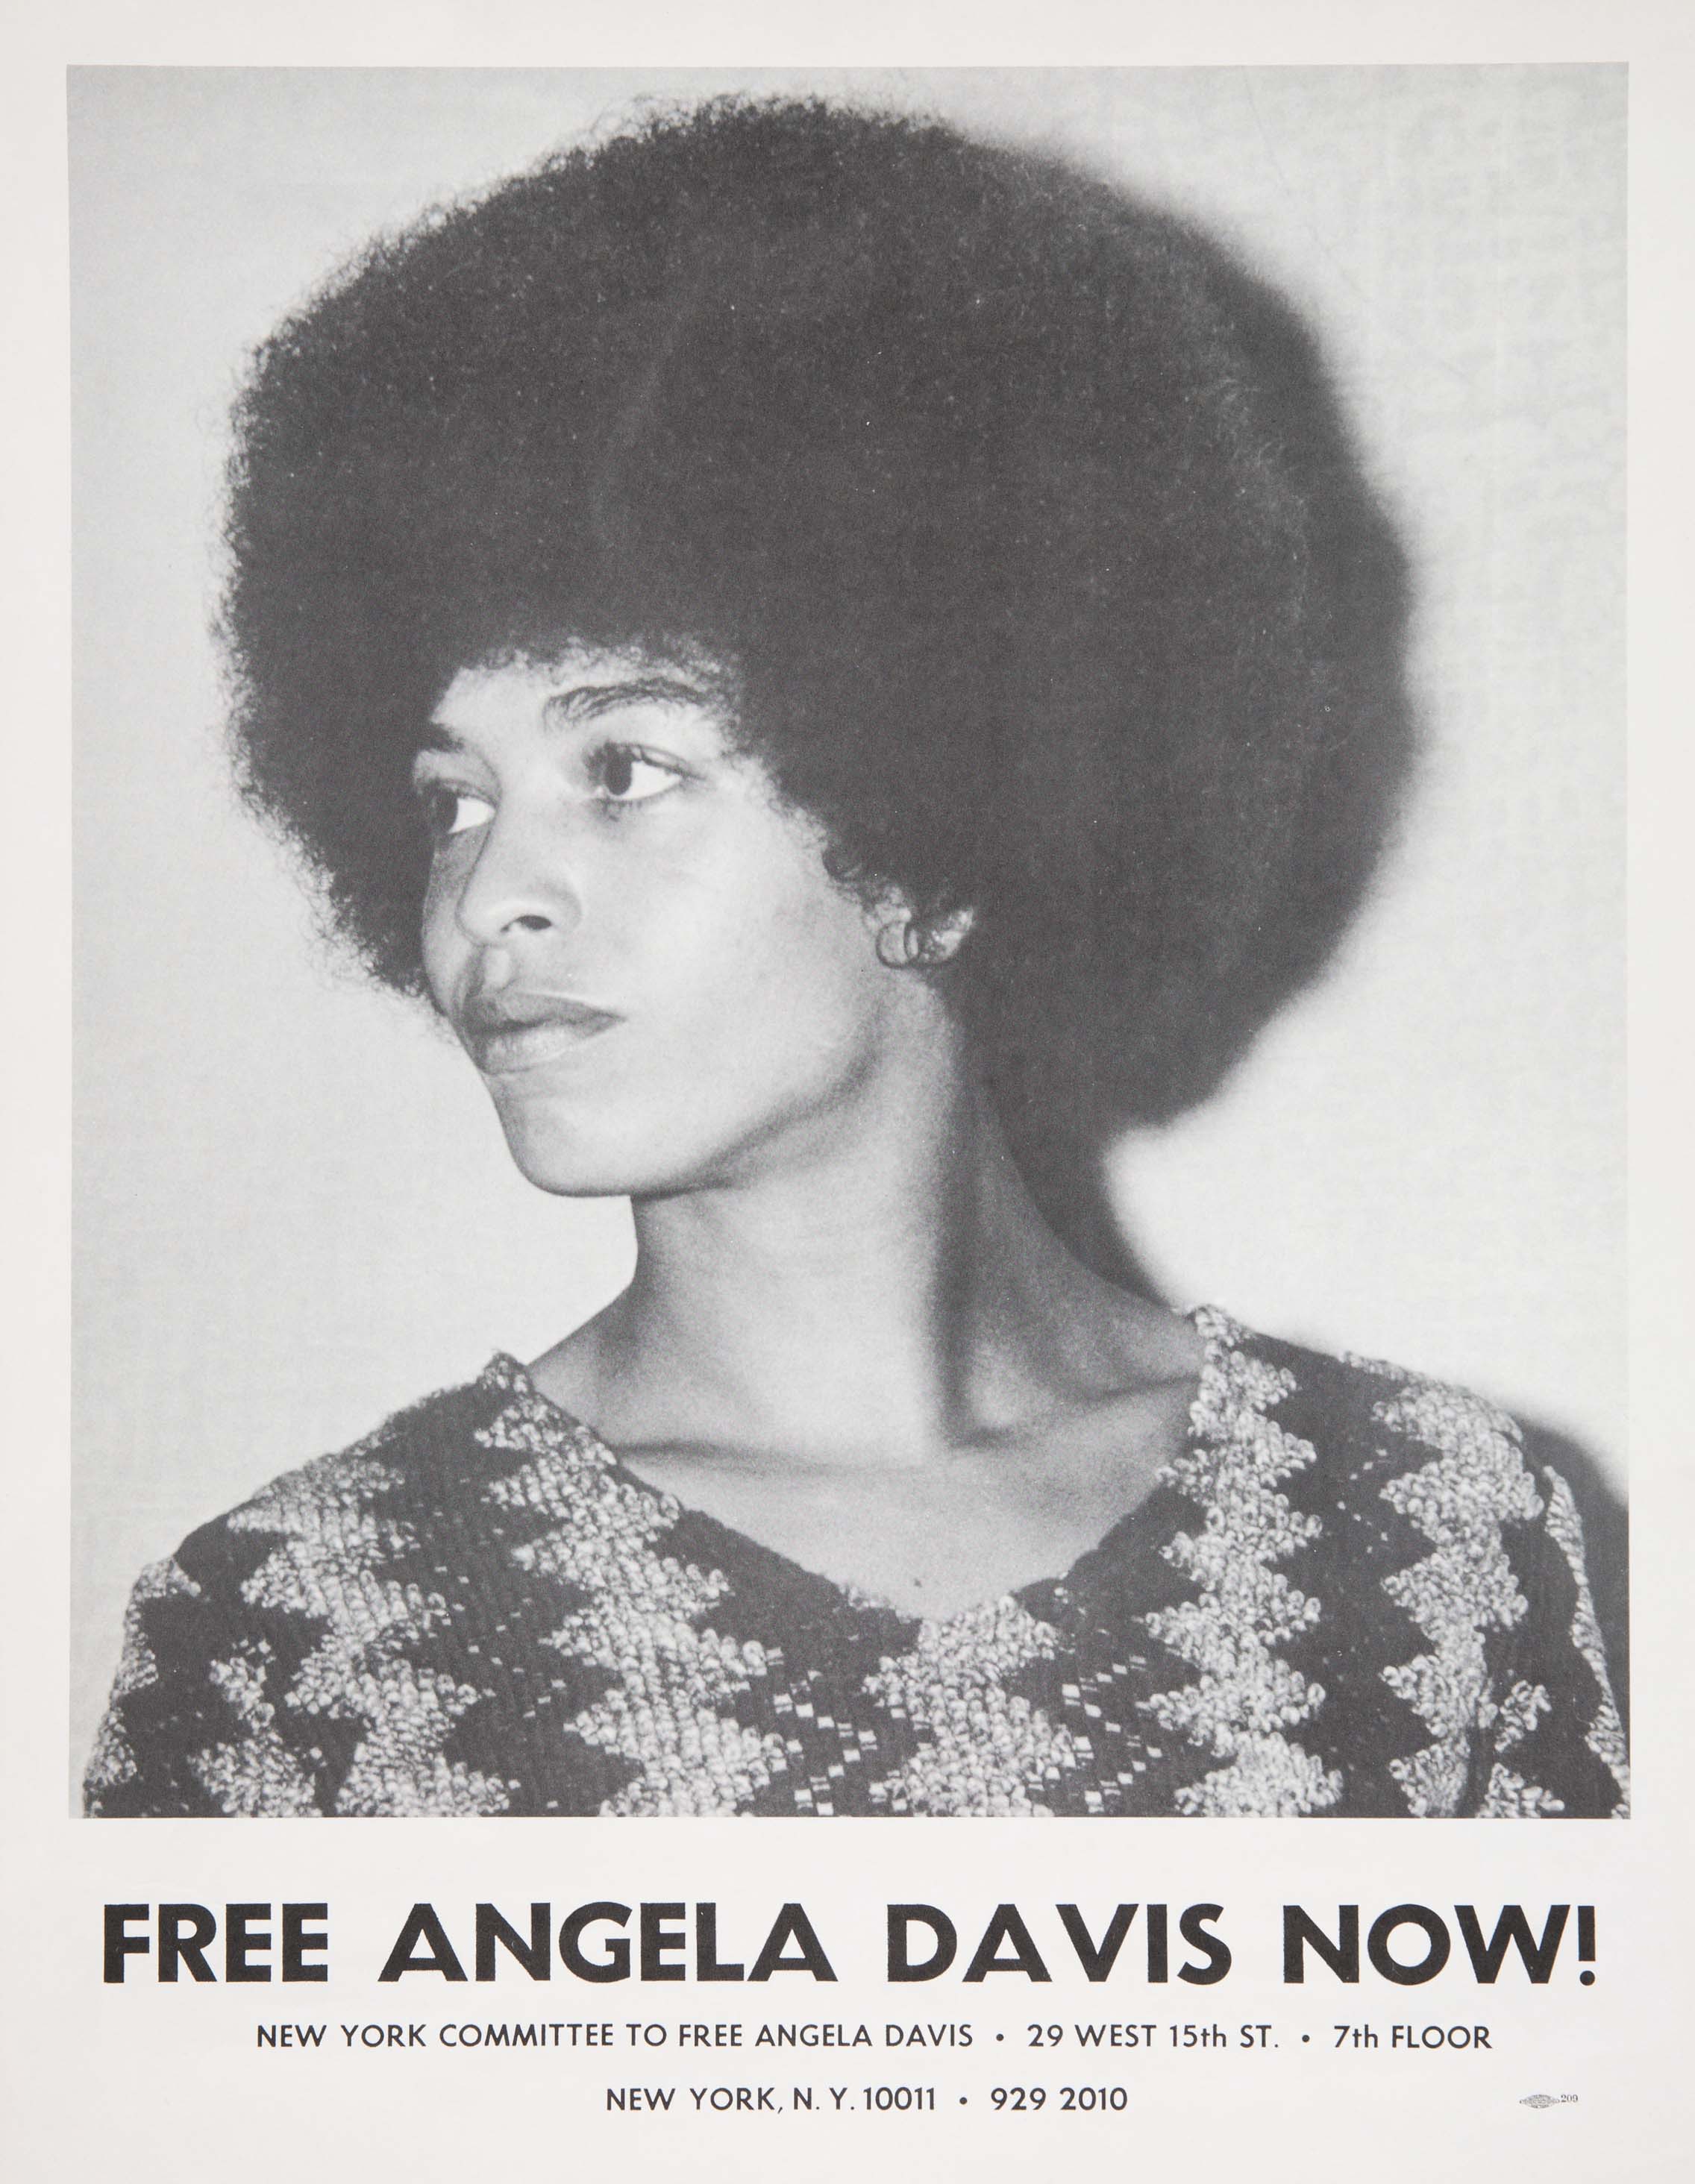 Free Angela Davis Now!